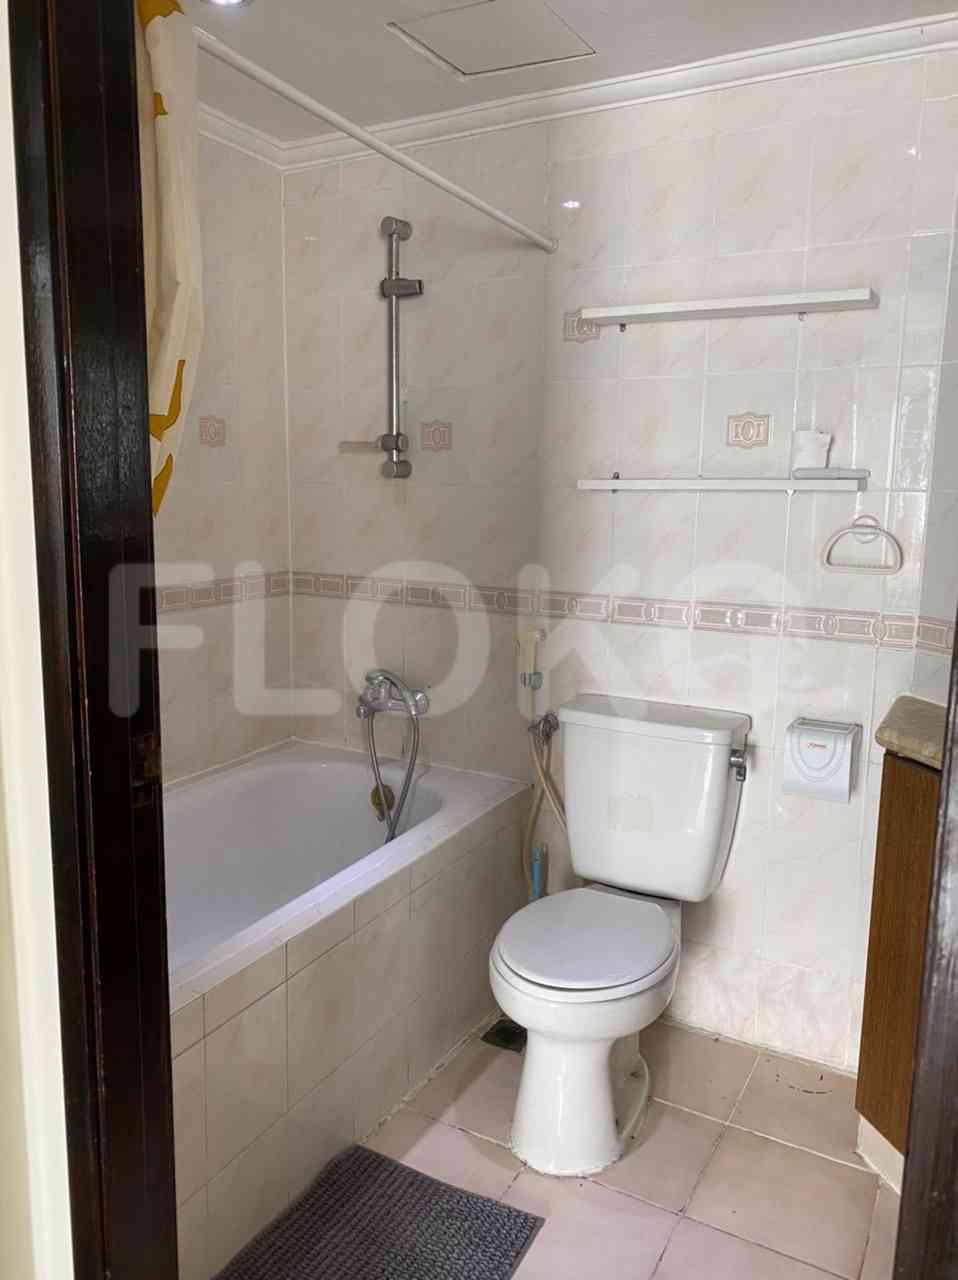 2 Bedroom on 21st Floor for Rent in Taman Anggrek Residence - ftab5c 5